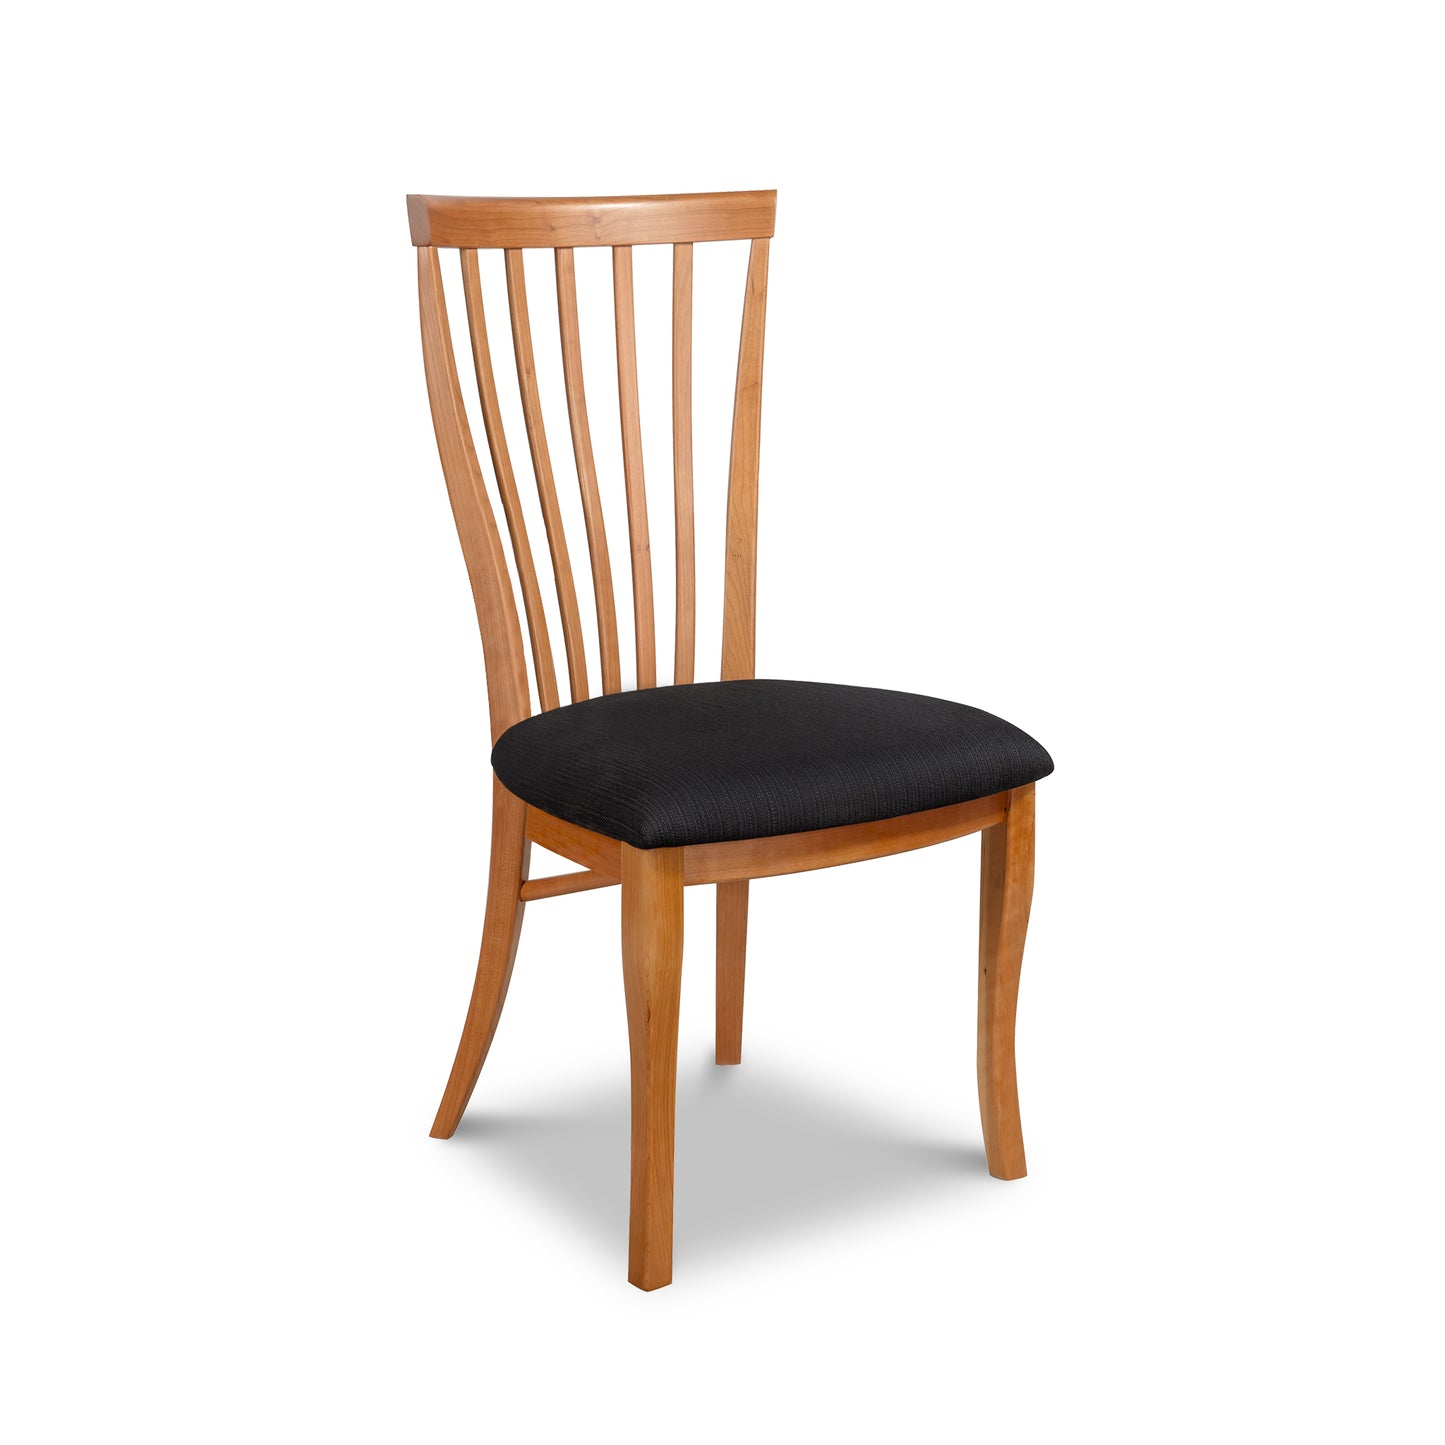 A comfortable Lyndon Furniture Classic Shaker Chair #1.